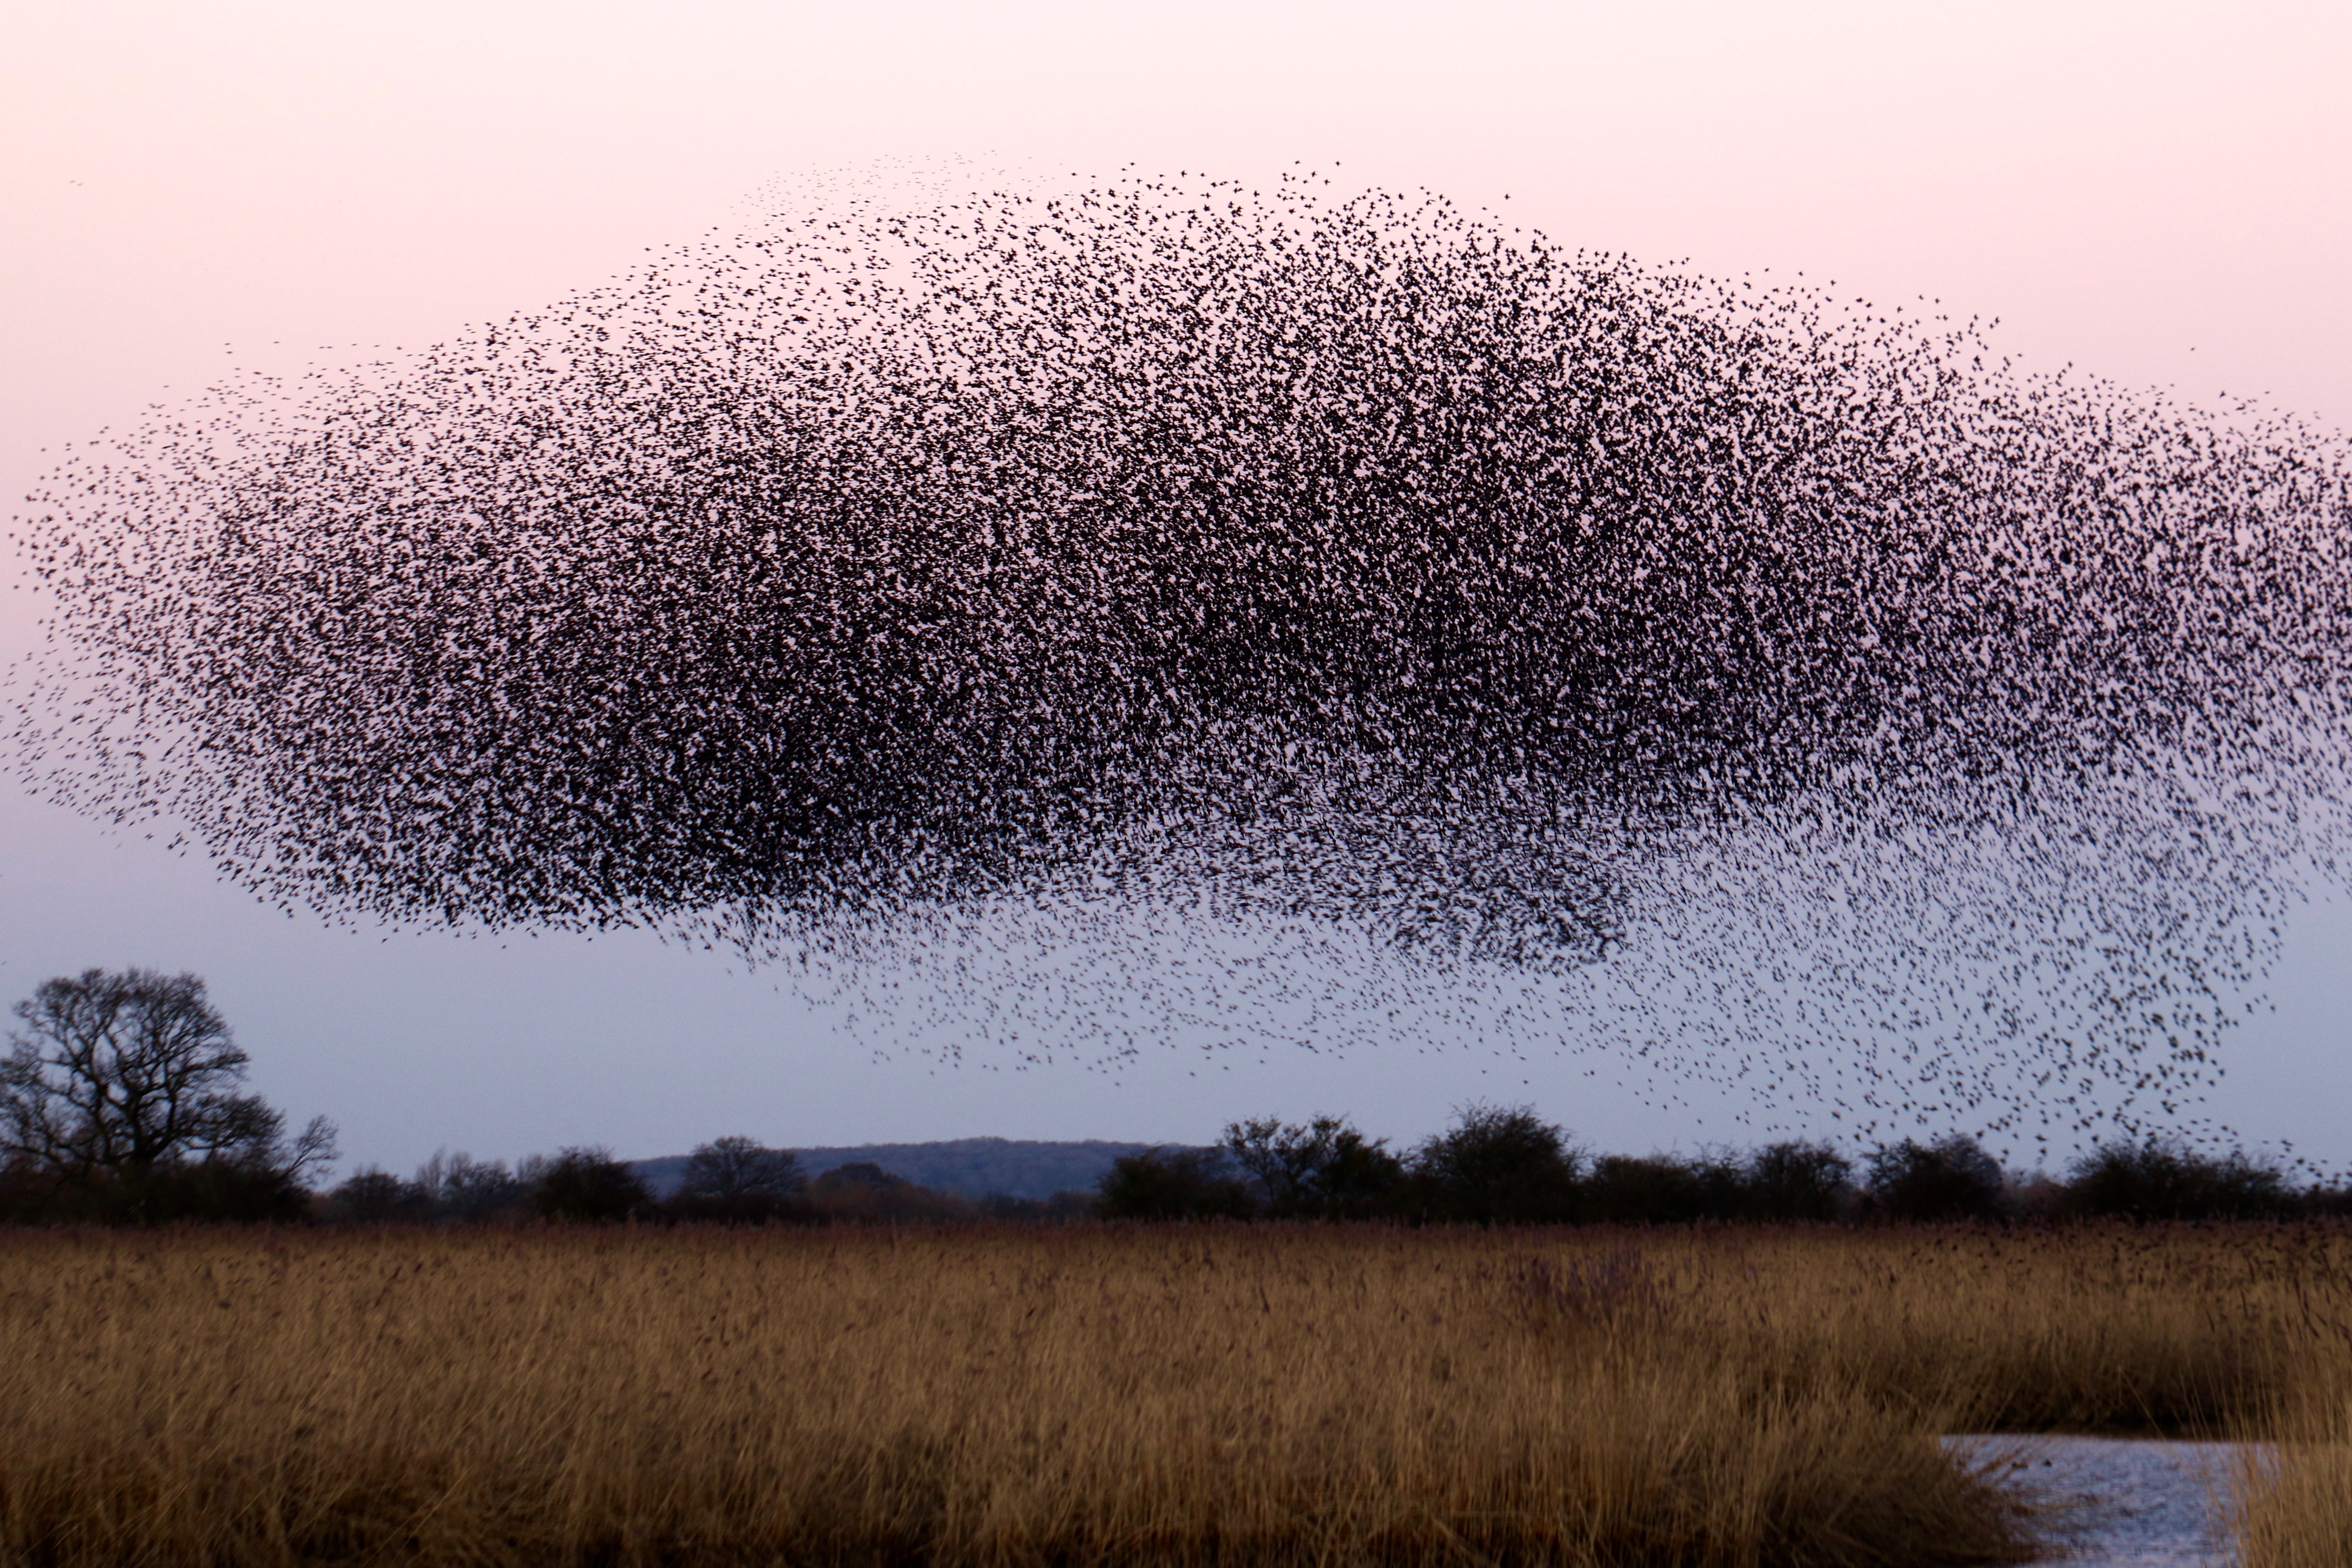 Swarm of birds